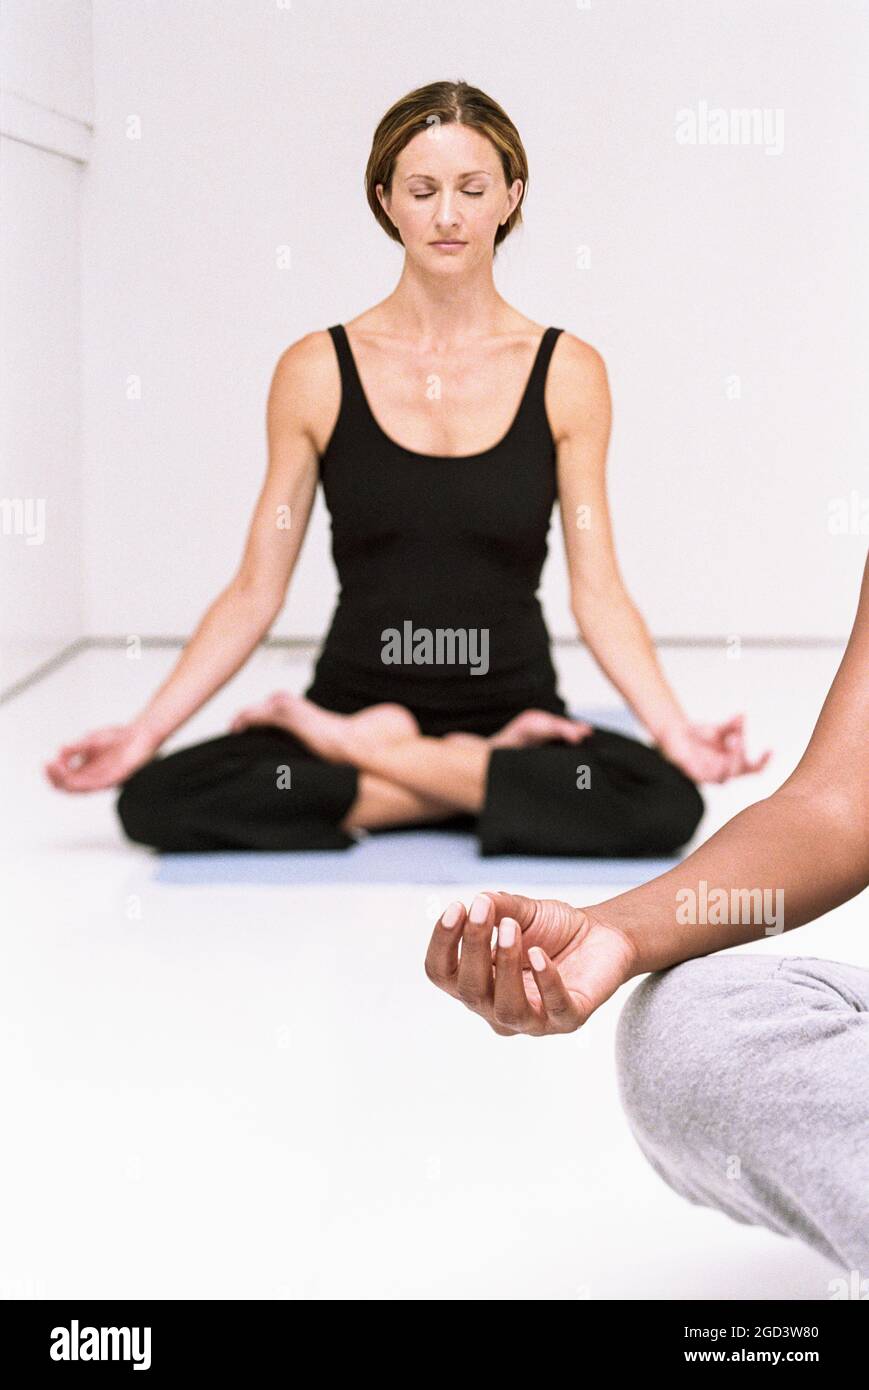 #HealthAndFitness #PhotoShoots #Focus #Meditation #Breathe #LotusPosition #Padmasana #Wellness  #YogaPractice #TimMcGuirePhotographer #TimMcGuireImage Stock Photo